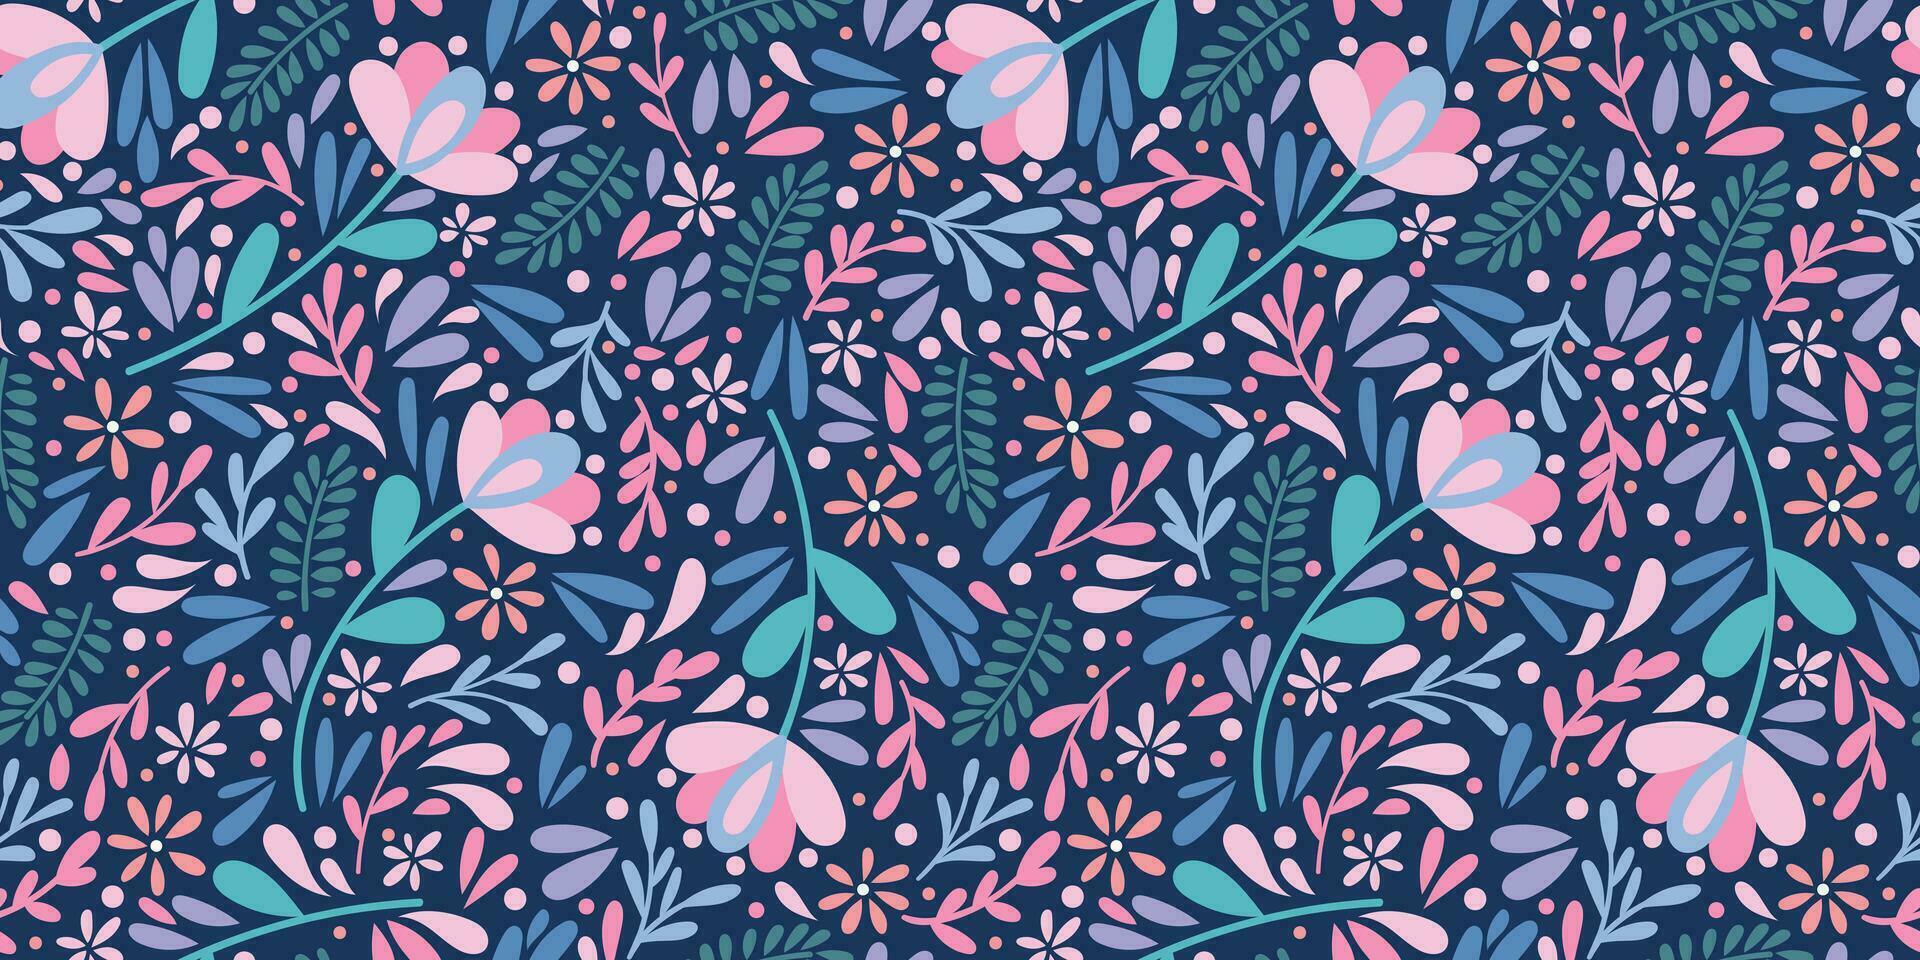 Dark blue modern floral pattern vector background, seamless repeating wallpaper